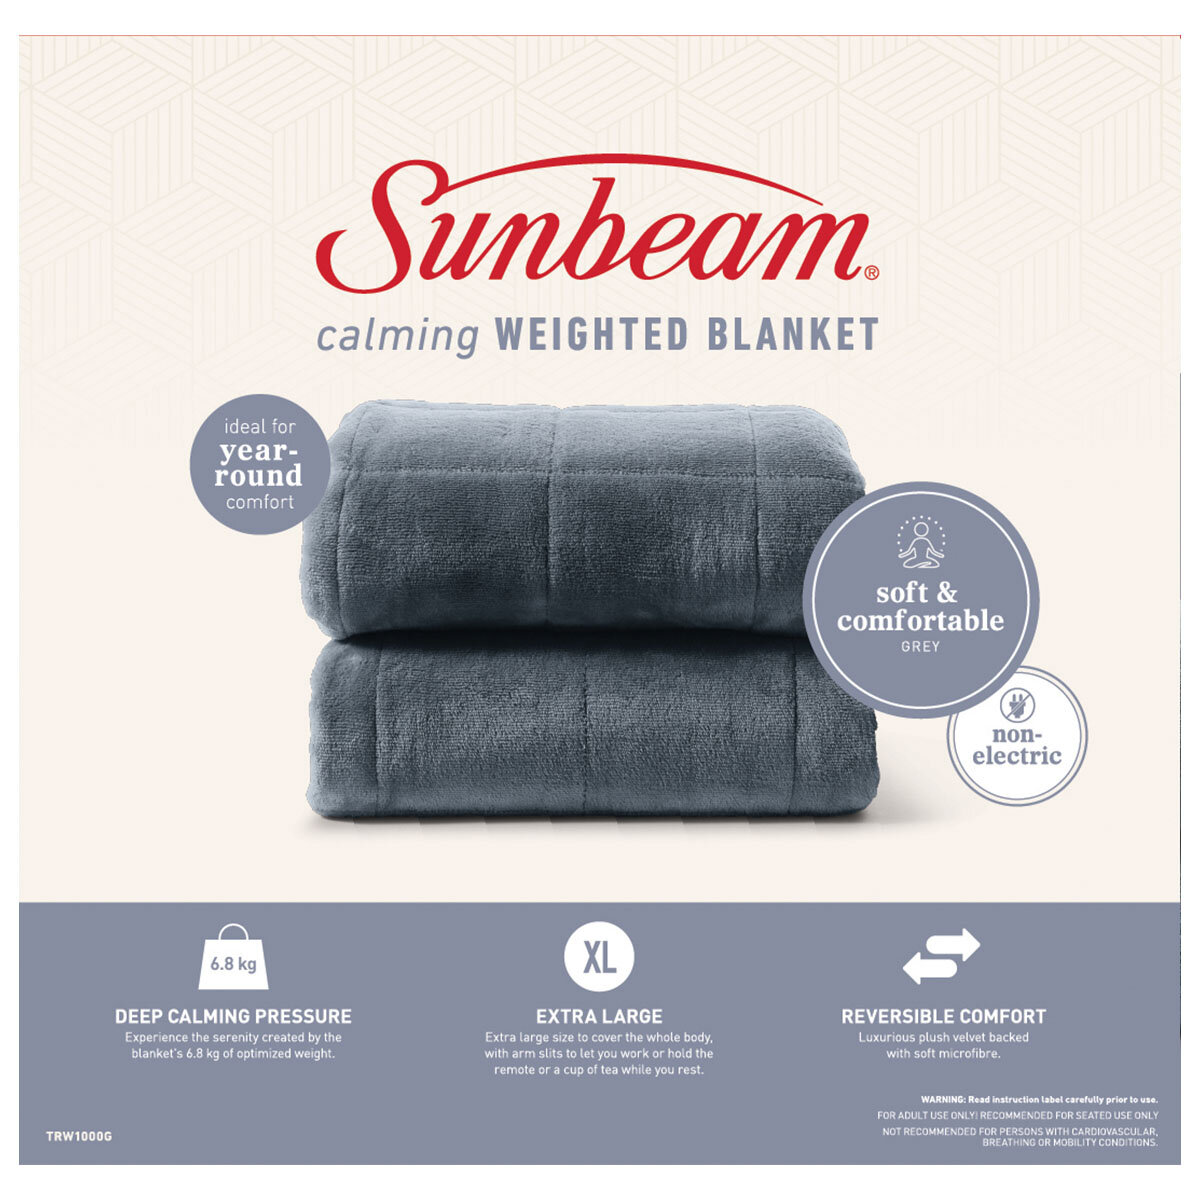 NEW Sunbeam Calming Weighted Blanket TRW1000G | eBay